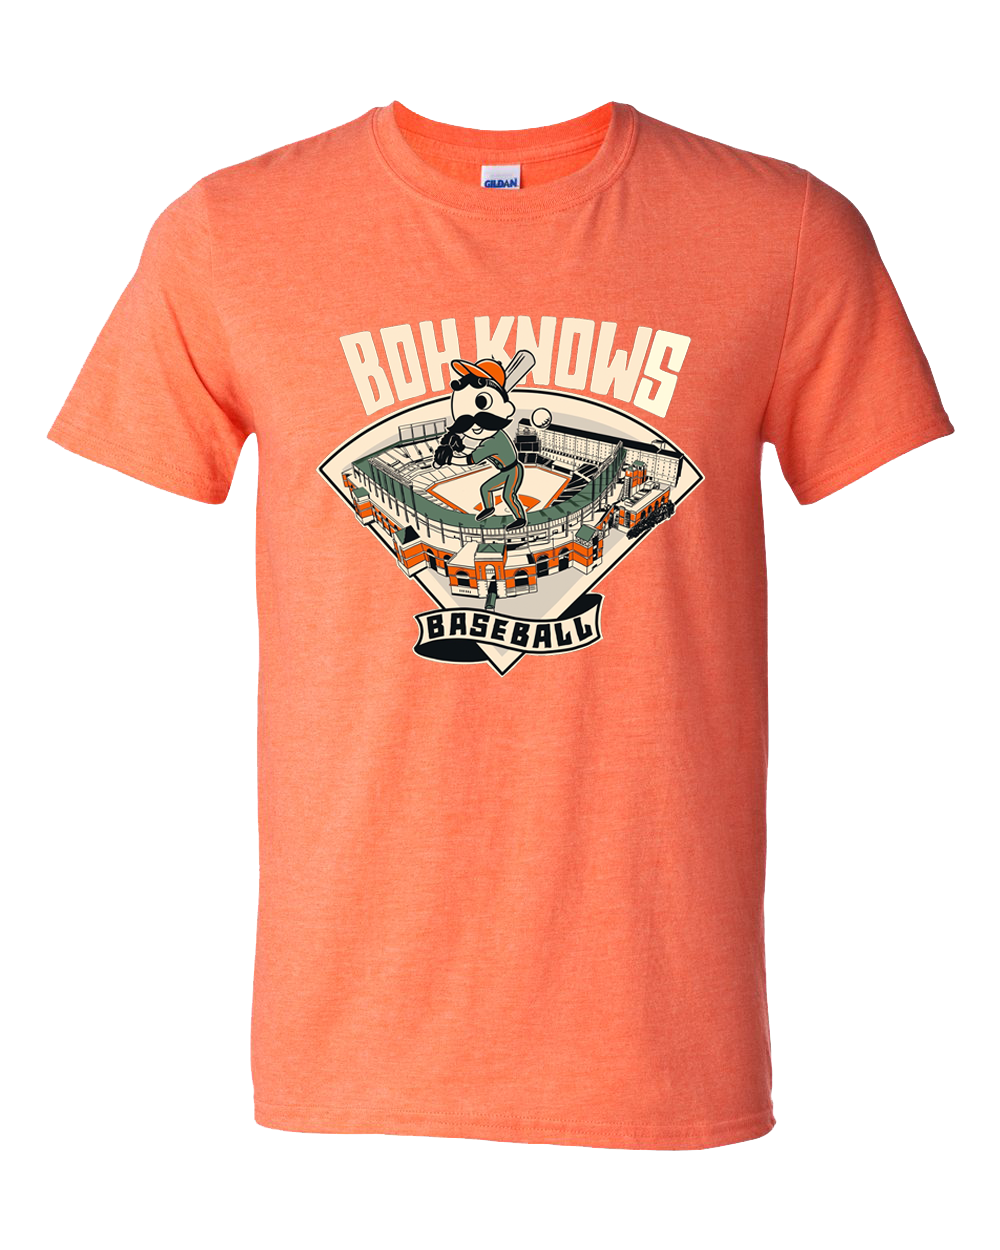 National Bohemian Boh Knows Baseball (Orange) / Shirt - Route One Apparel